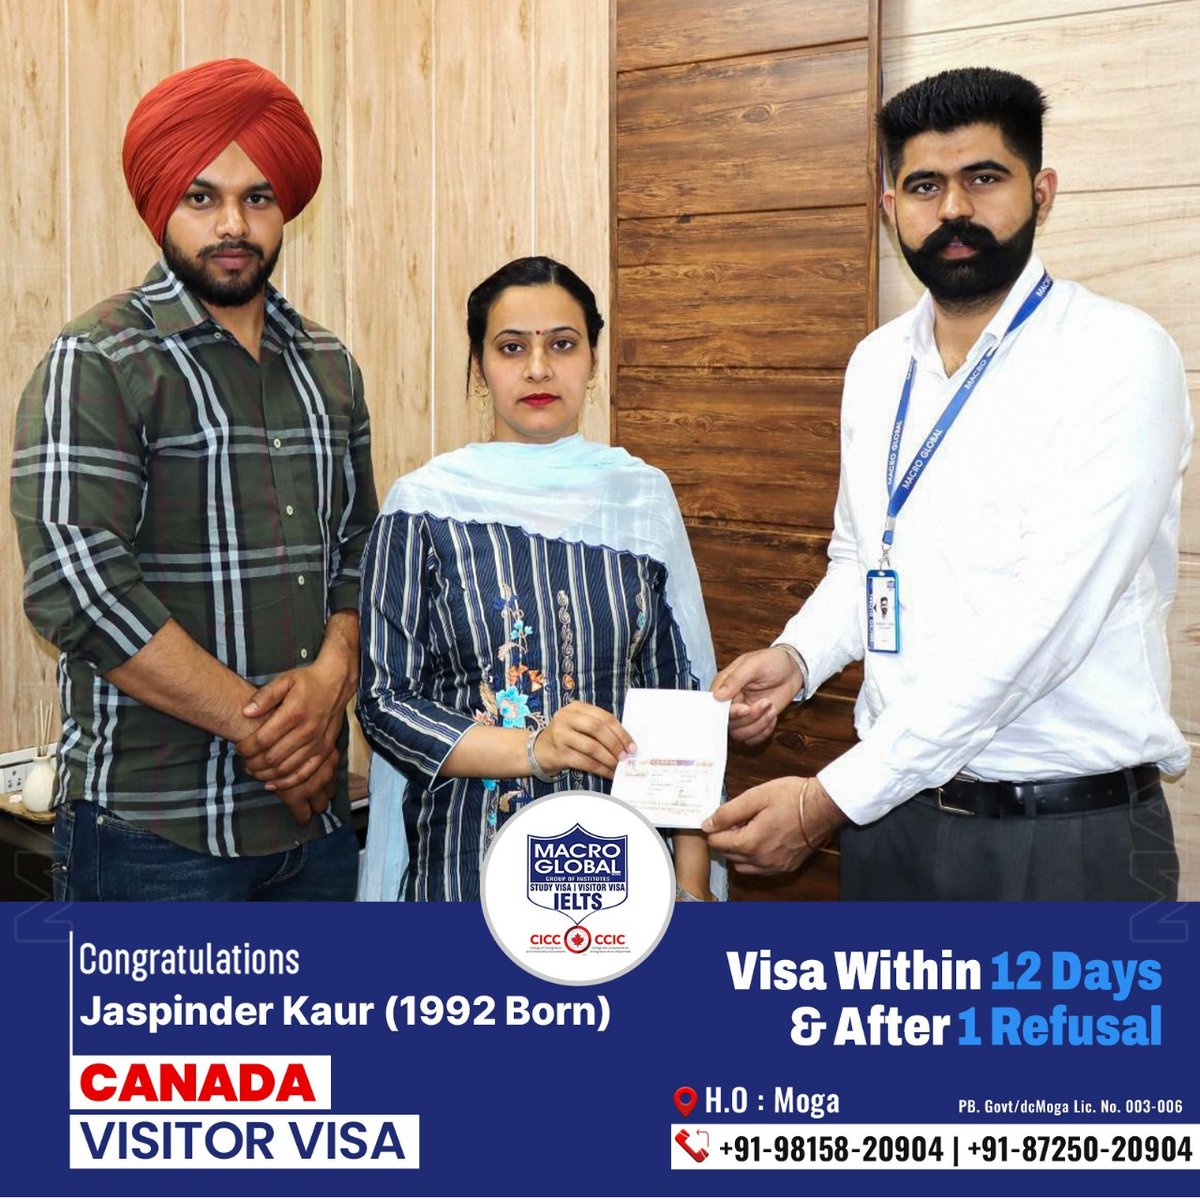 Jaspinder Kaur overcame a previous 1 refusal and secured her Canadian visitor visa in just 12 days 🇨🇦

#MacroGlobal #GurmilapSinghDalla #Canada #Canadastudyvisa #canadaopenworkpermit #spousevisa #Visitorvisa #Visa #IELTS #Immigration #immigrationlawyer #Moga